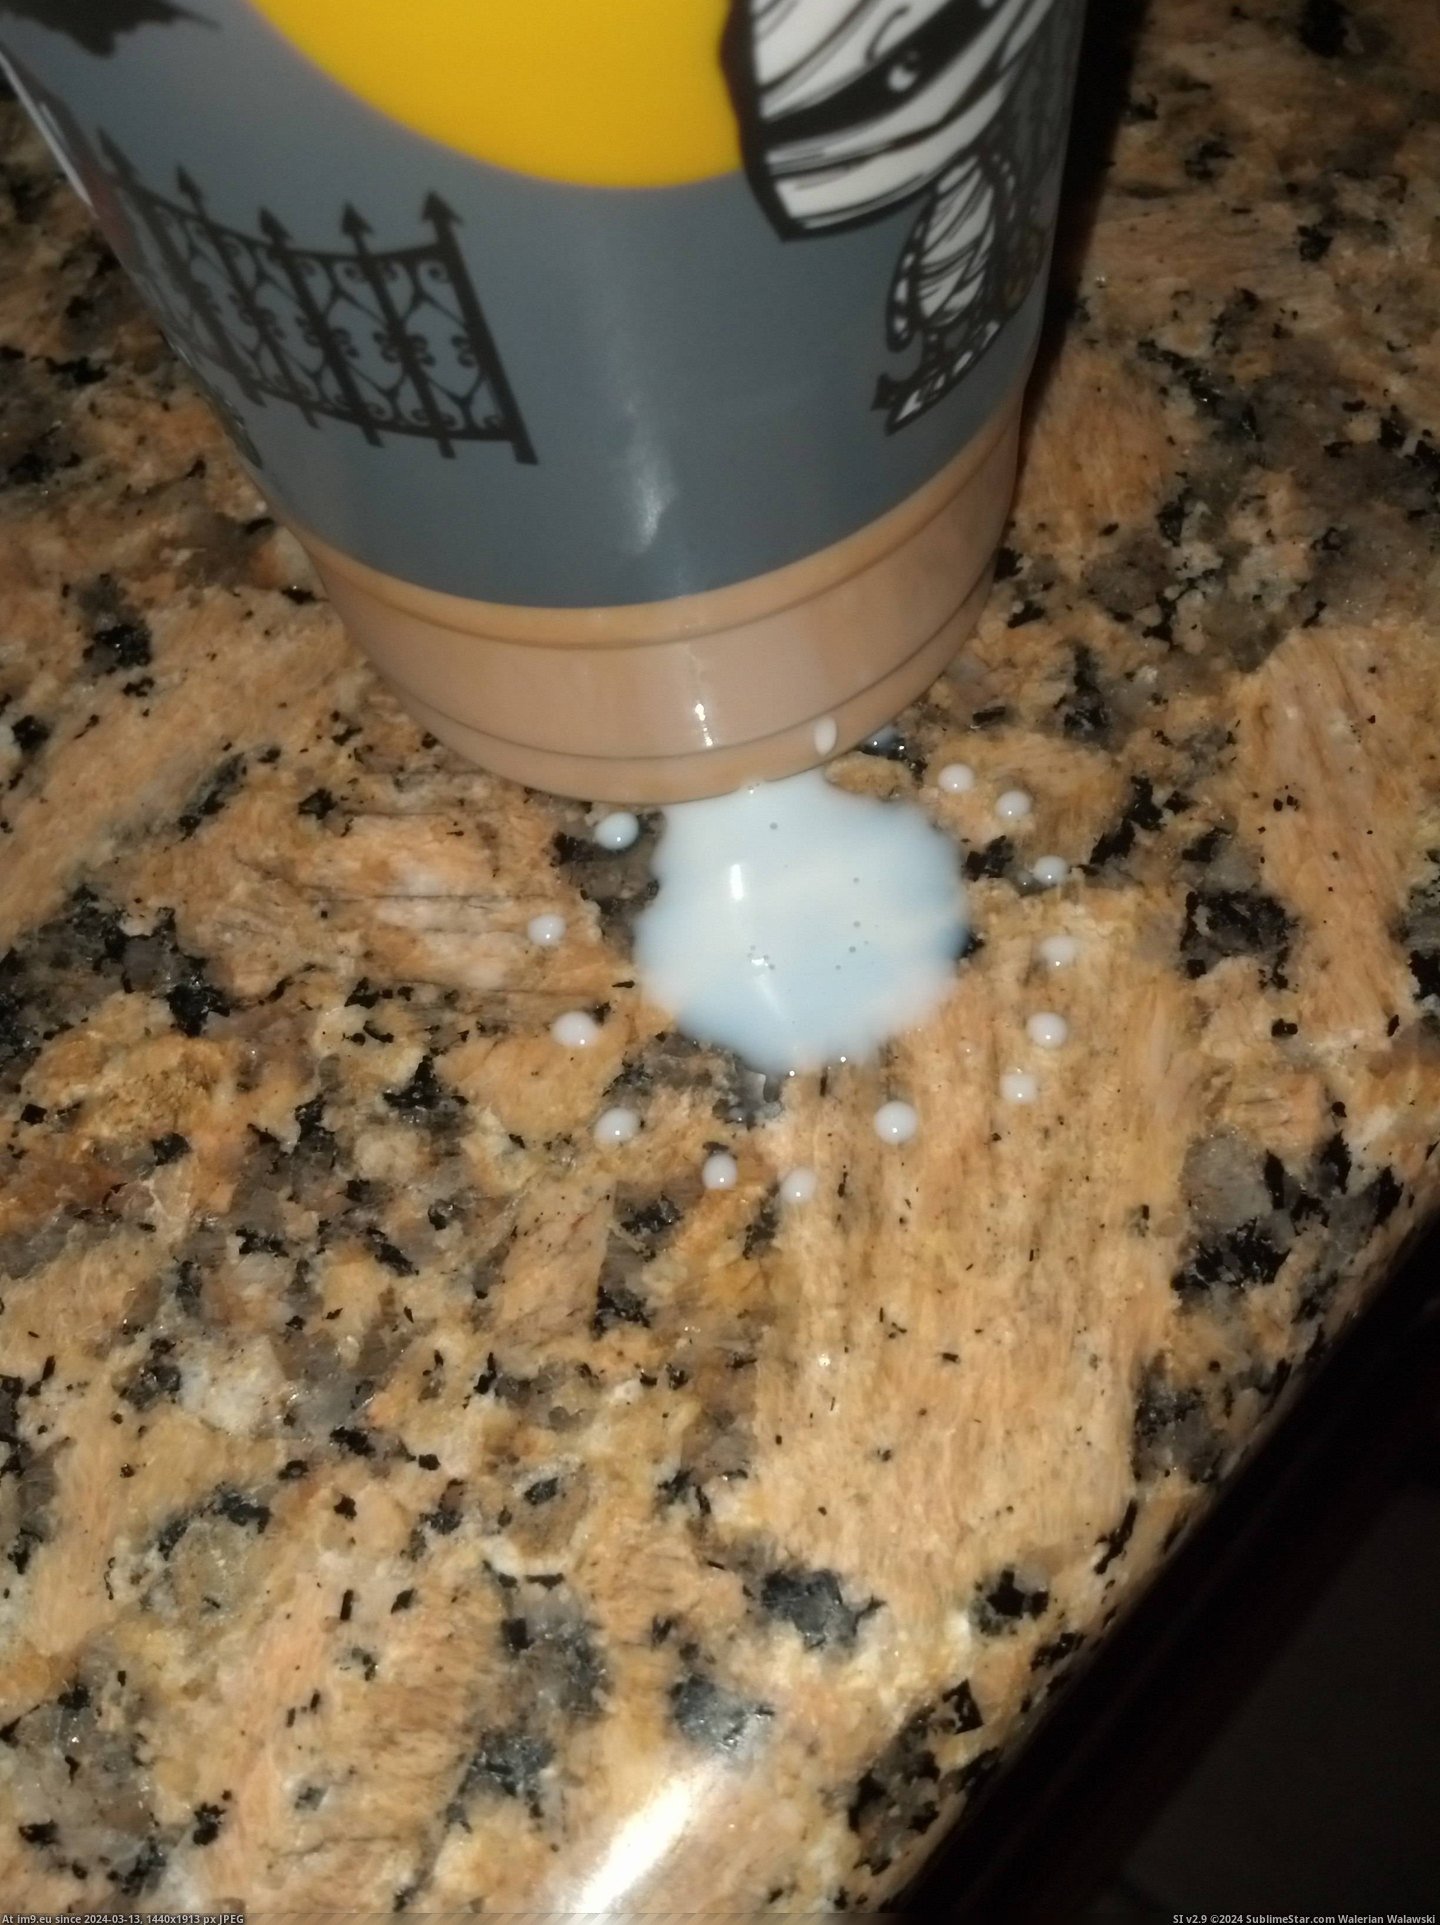 #Milk #Spilled #Droplet #Cool [Mildlyinteresting] Spilled some milk and it made a cool droplet. Pic. (Obraz z album My r/MILDLYINTERESTING favs))